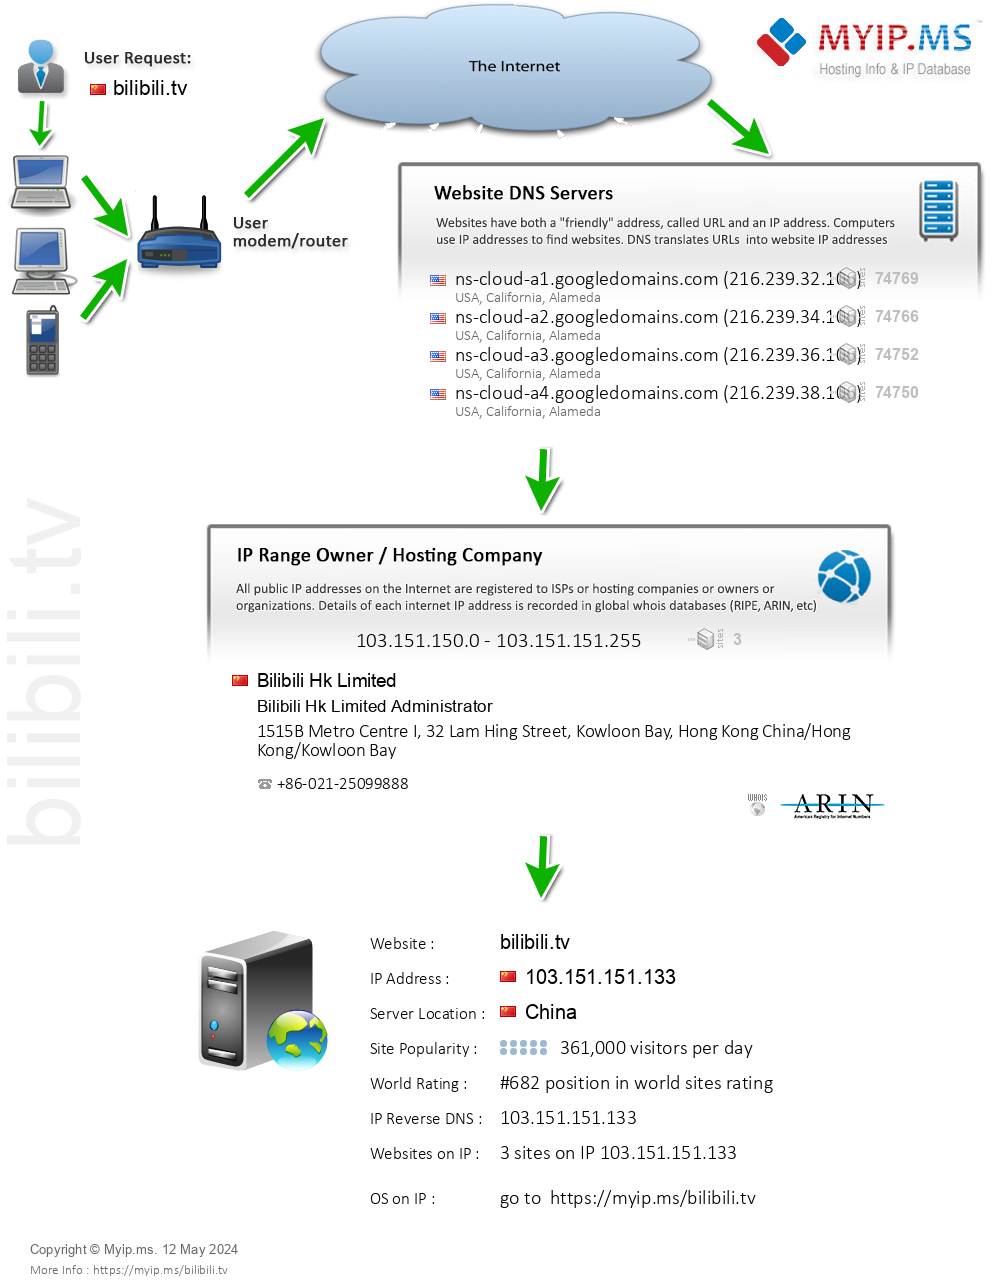 Bilibili.tv - Website Hosting Visual IP Diagram